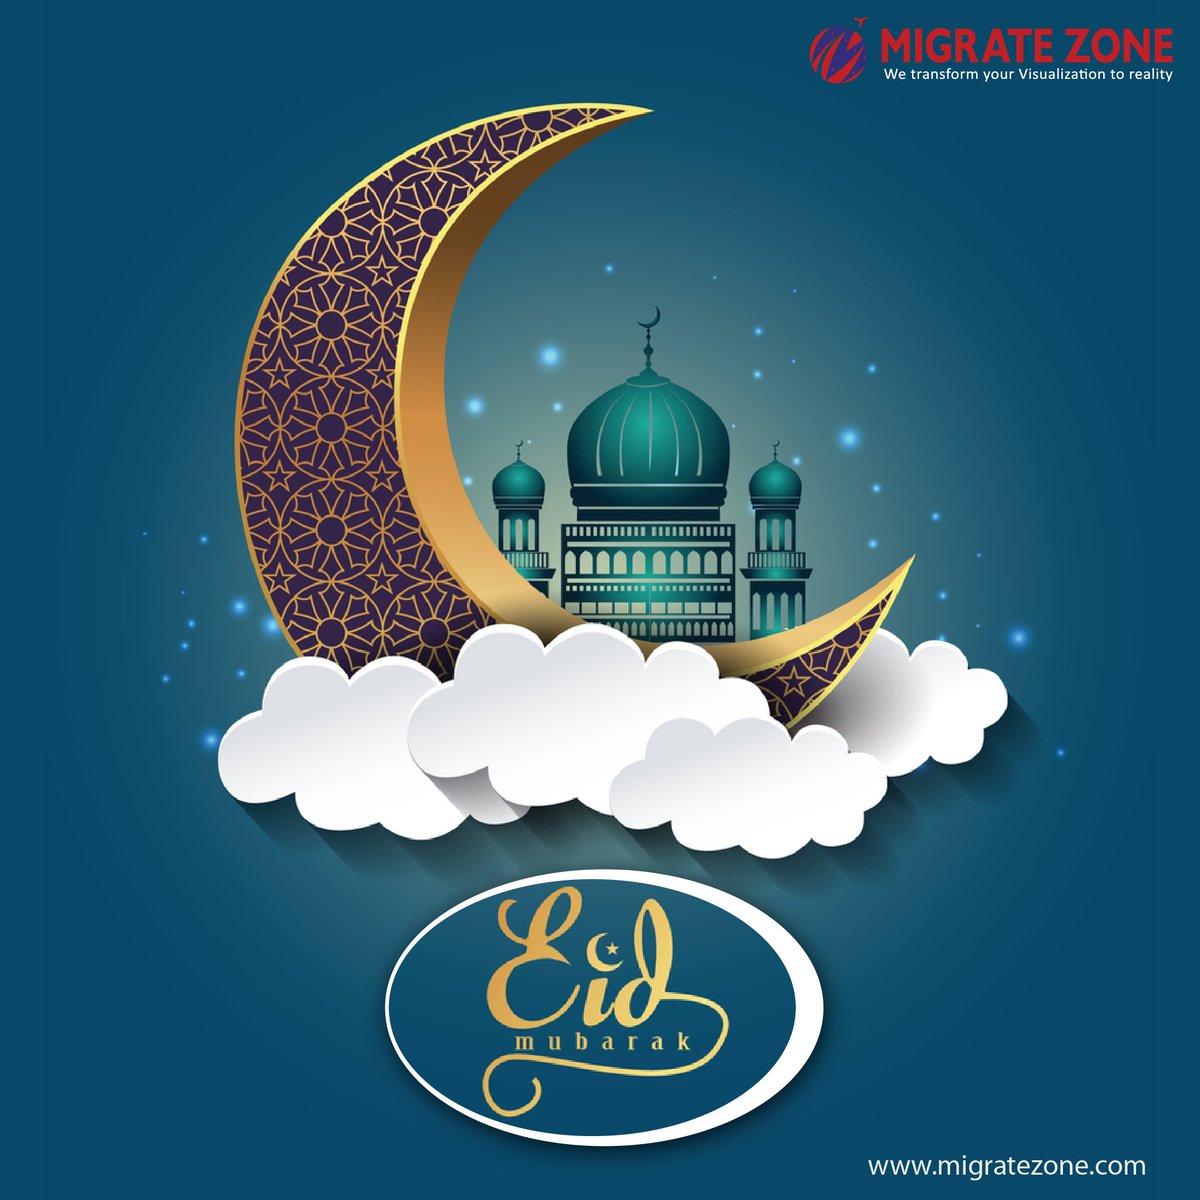 🌙✨On this blessed occasion of Eid-ul-Fitr, may Allah's blessings fill your life with joy, peace, and prosperity. Eid Mubarak! ✨💕
.
.
#EidMubarak #Family #communityspirit❤️ #CelebratingEid #EidVibes 🌙🕋🕌